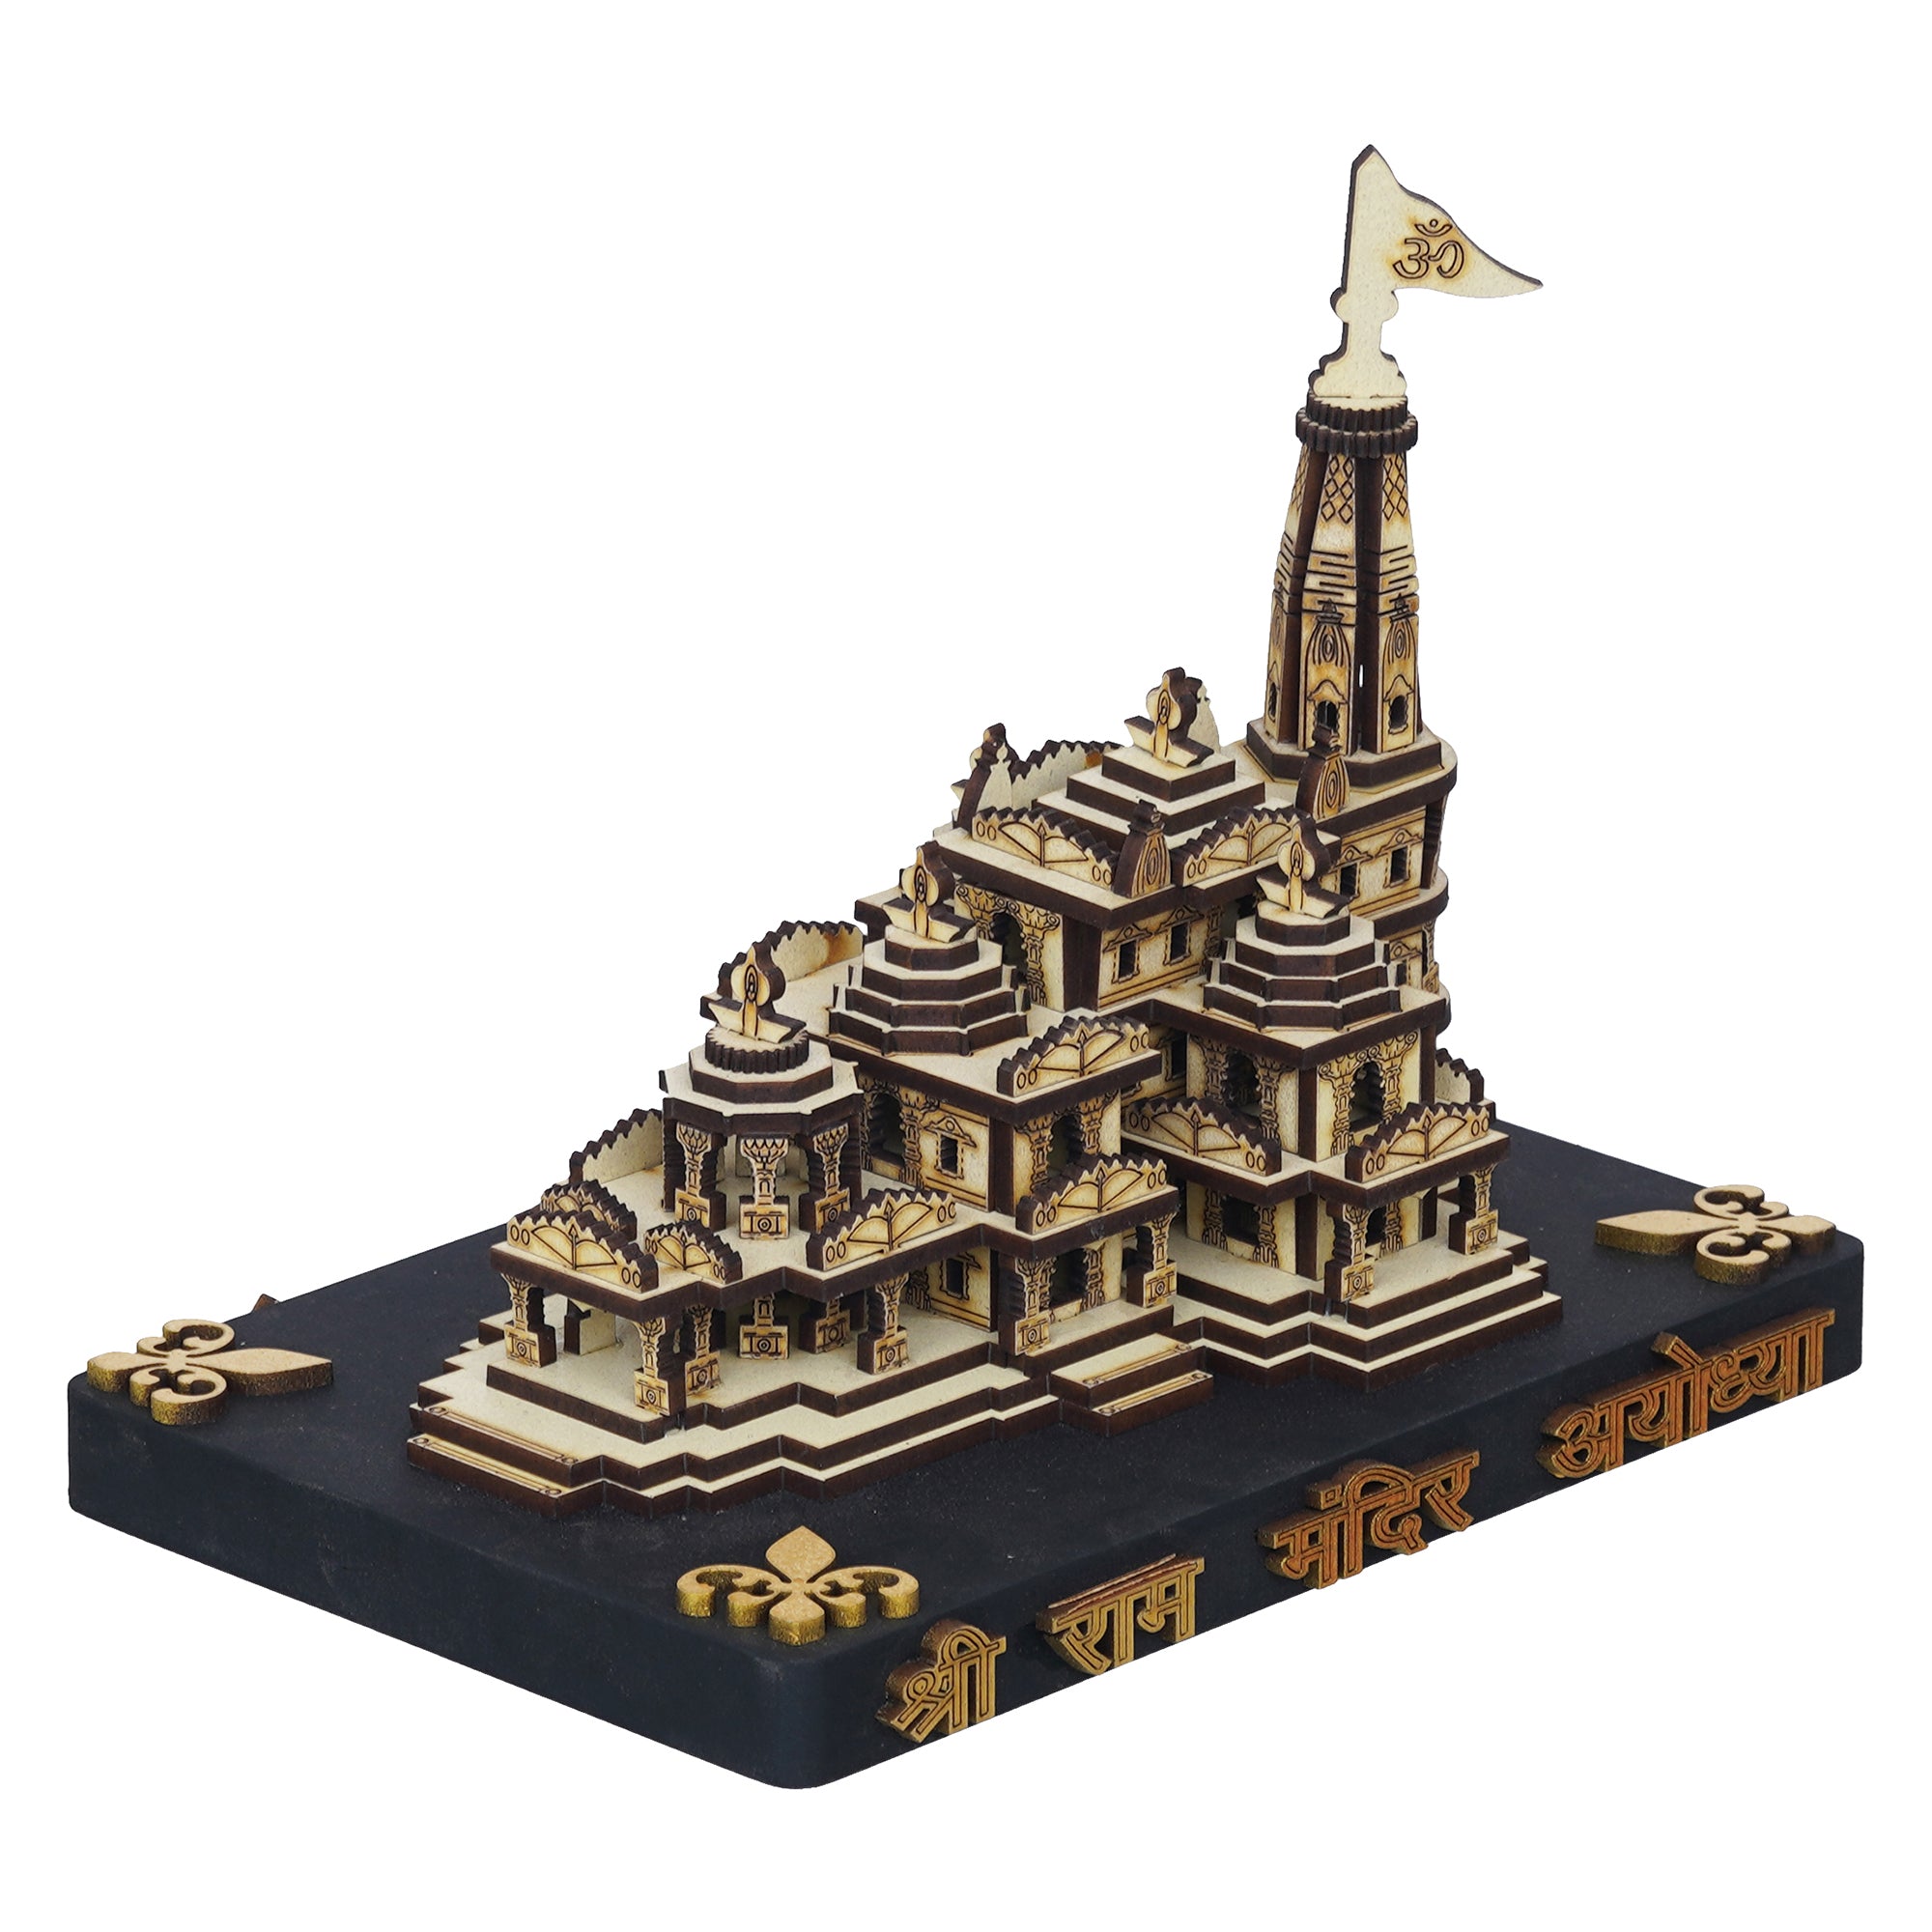 eCraftIndia Shri Ram Mandir Ayodhya Model - Wooden MDF Craftsmanship Authentic Designer Temple - Ideal for Home Temple, Decor, and Spiritual Gifting (Beige, Gold) 6